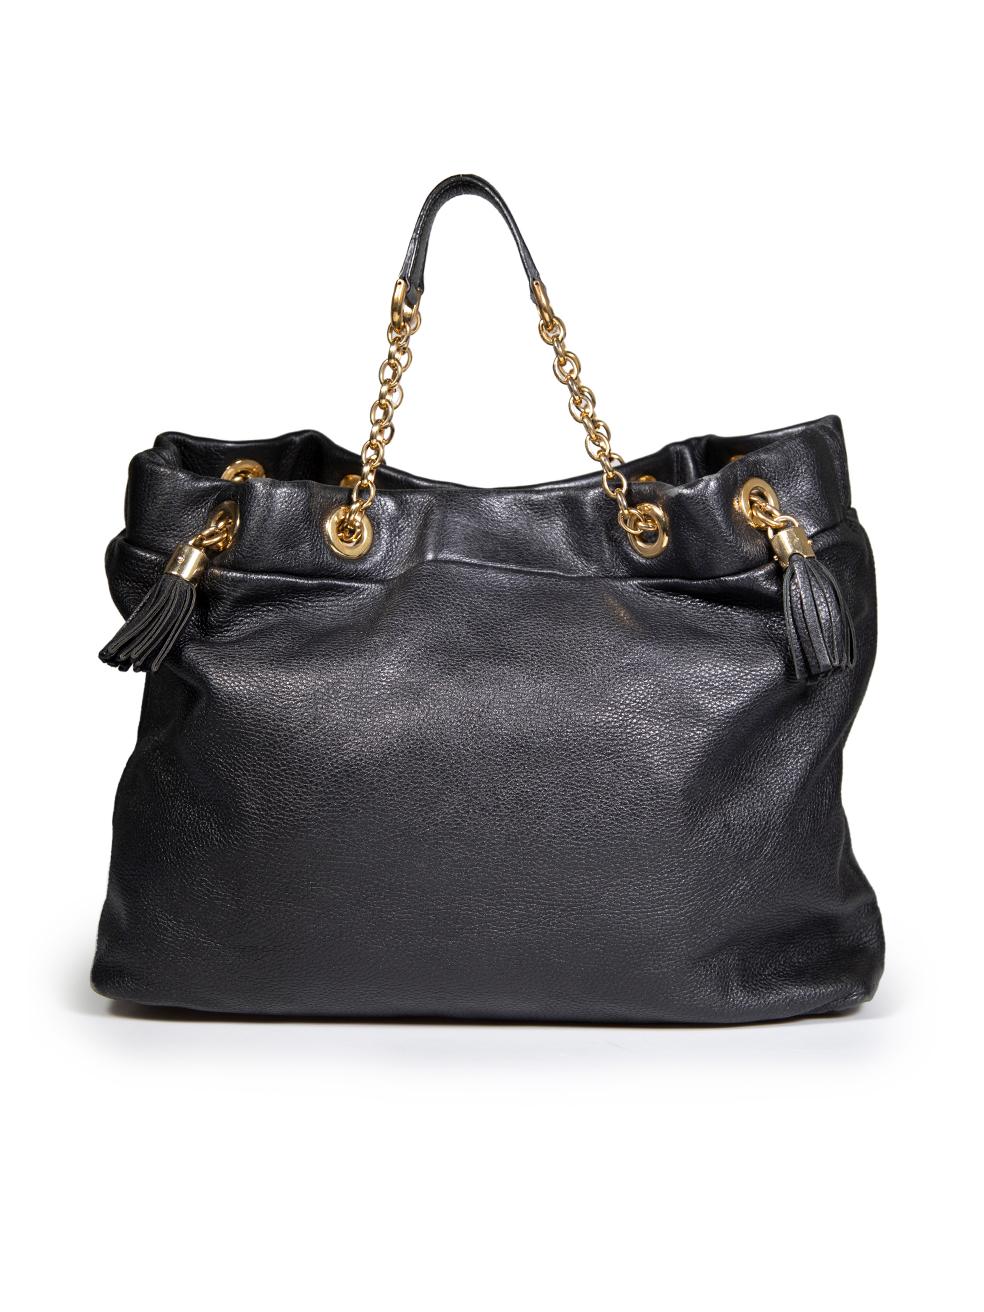 Dolce & Gabbana Black Tassel Chain Shoulder Bag In Good Condition For Sale In London, GB